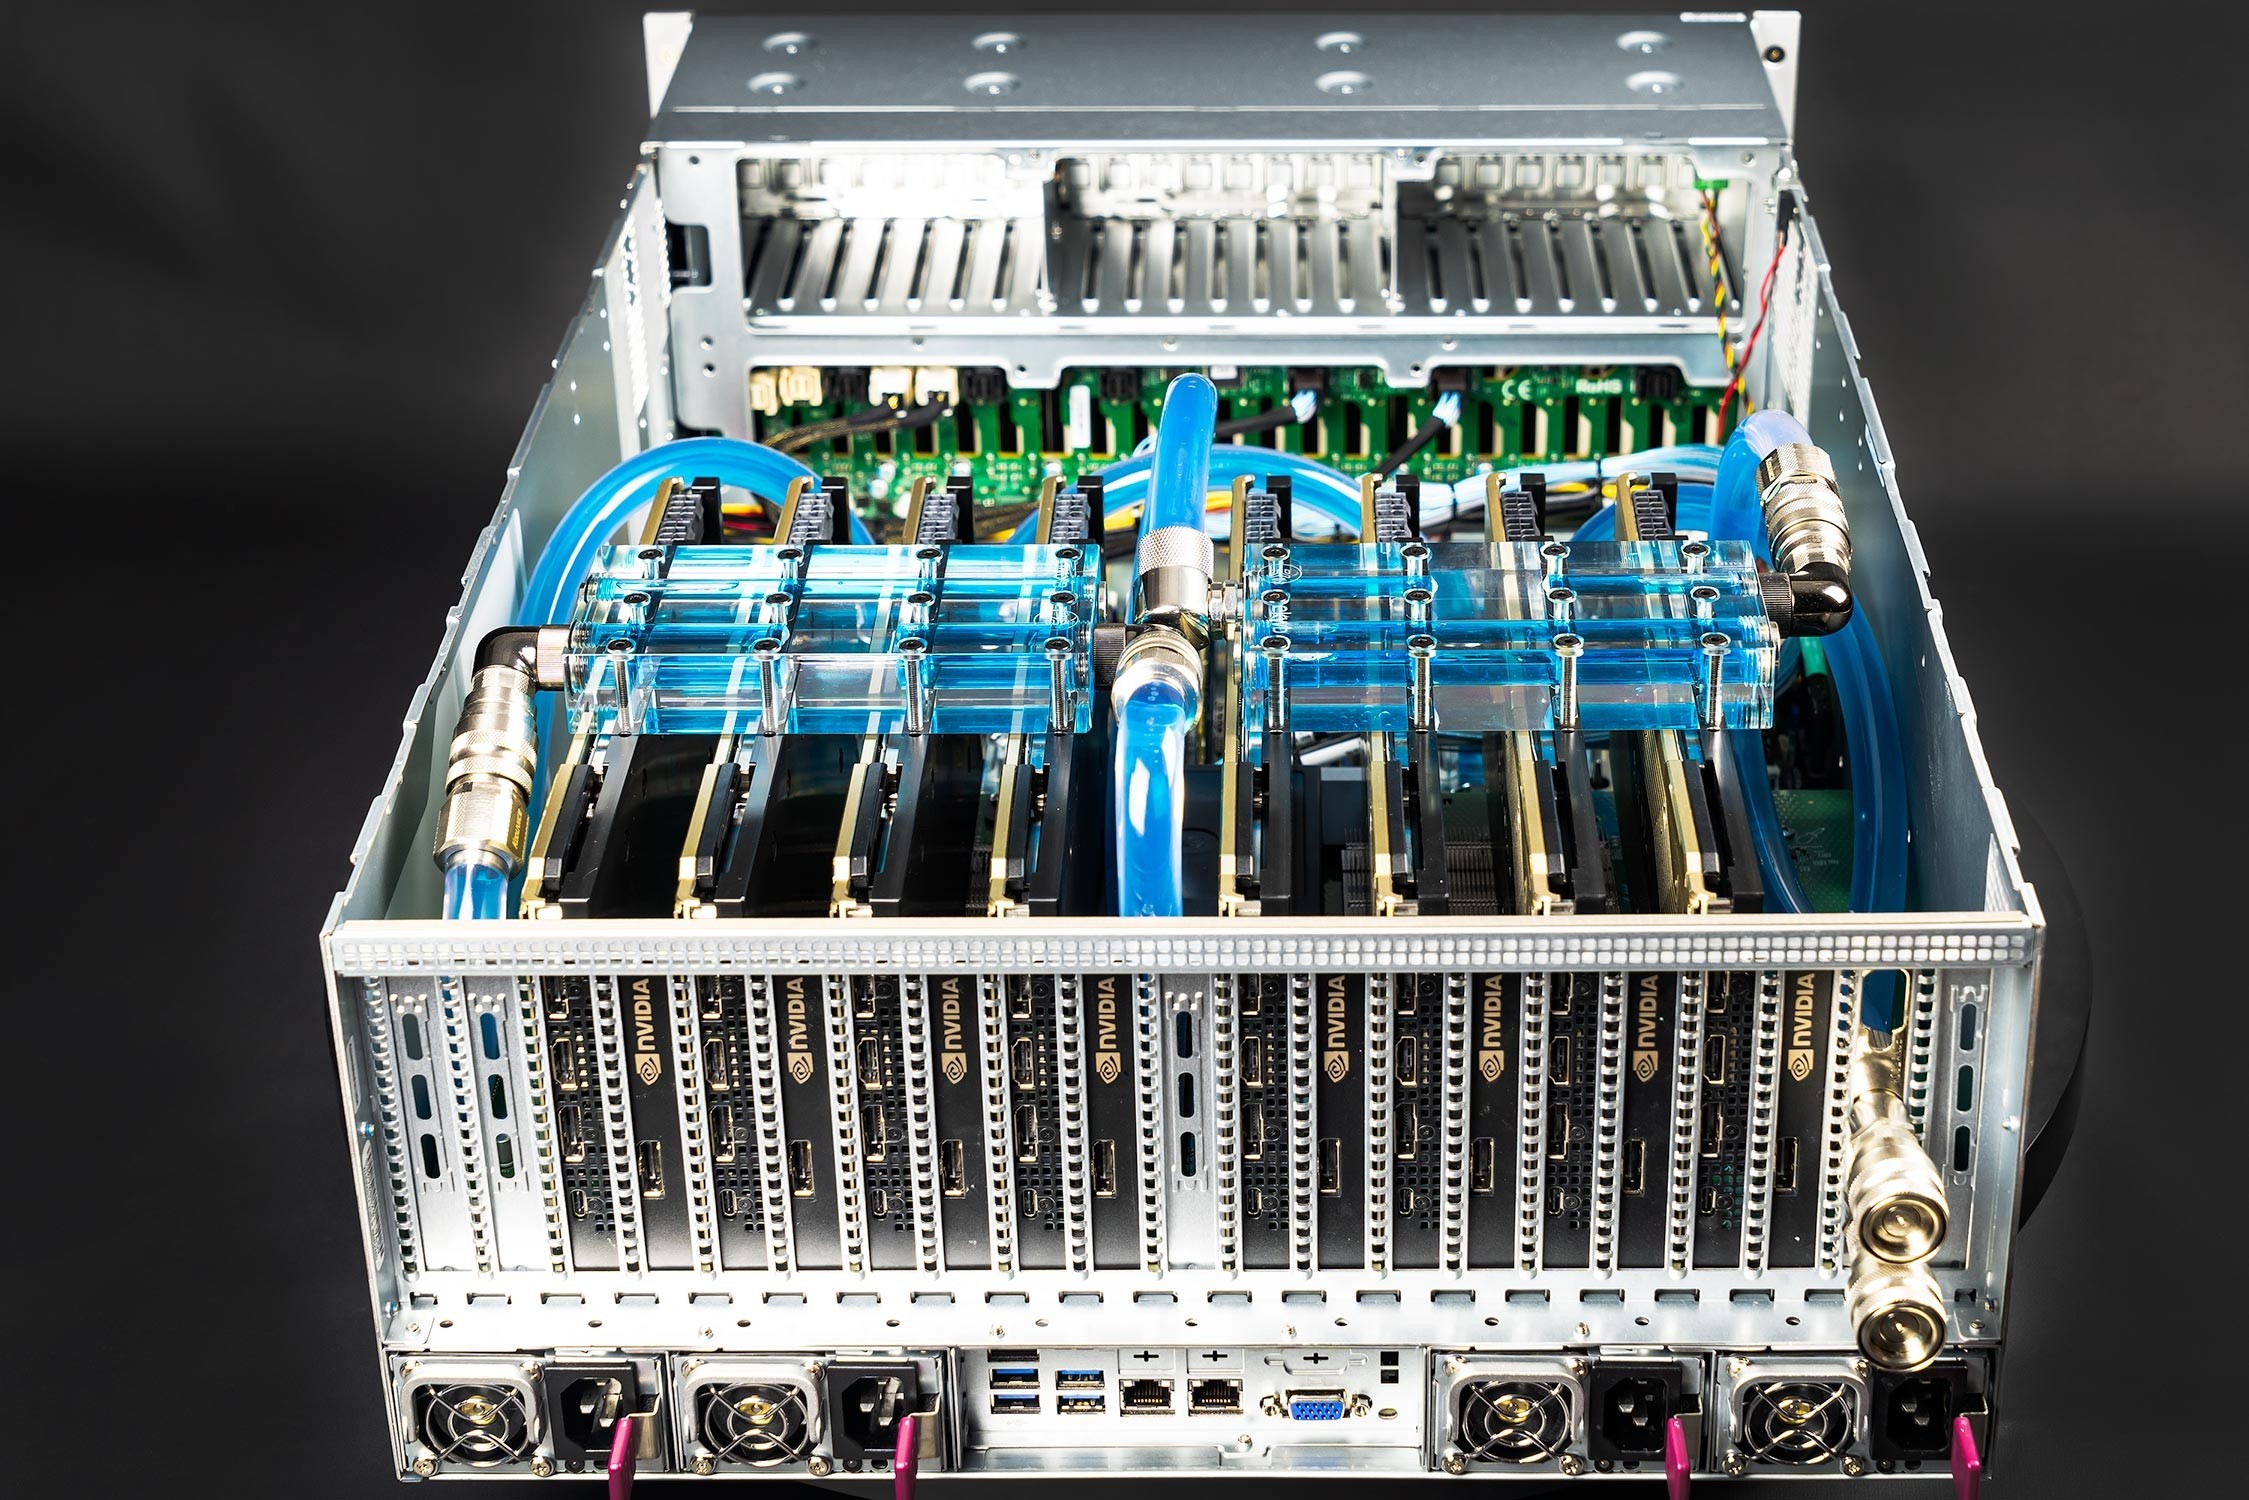 8 TITAN RTX GPU deep learning server